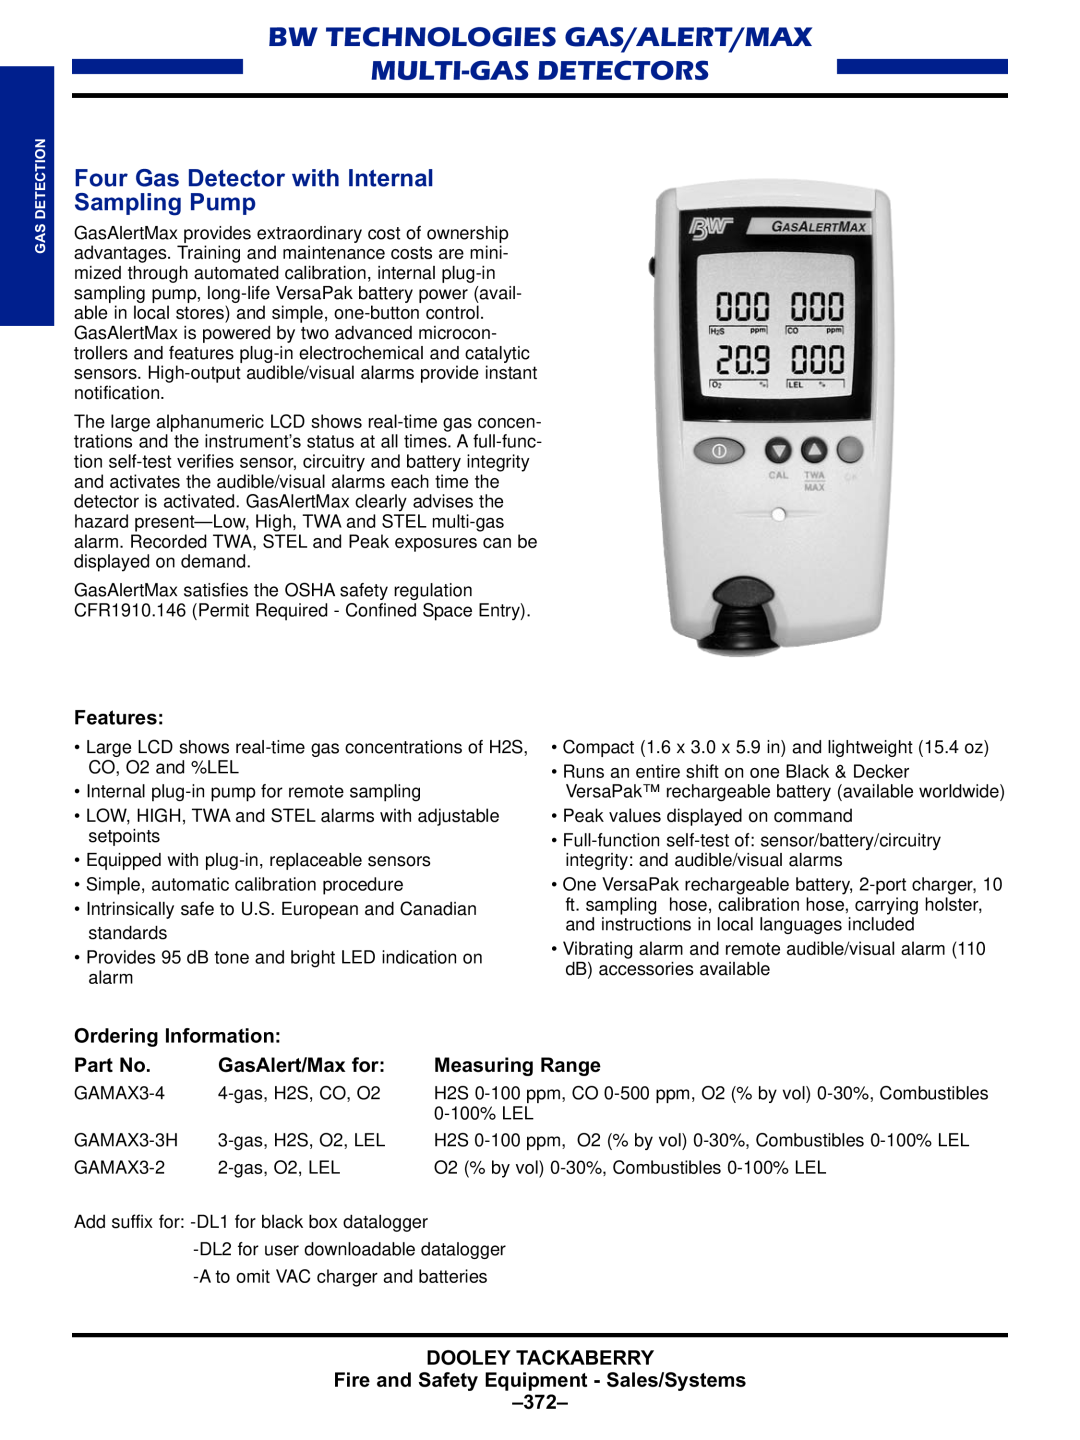 Black & Decker MULTI-GAS DETECTORS manual Bw Technologies Gas/Alert/Max Multi-Gasdetectors 